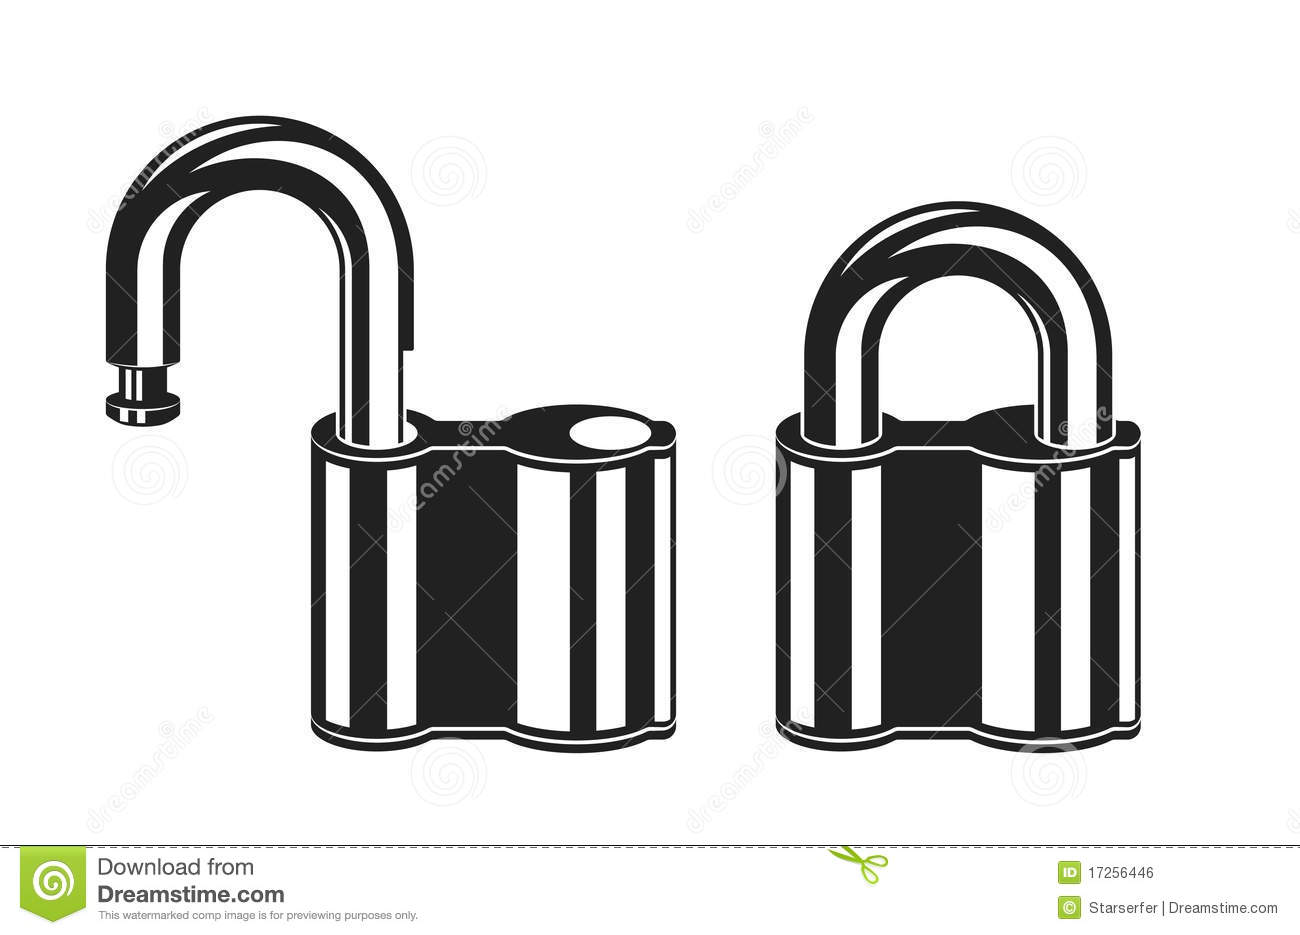 Locked And Unlocked Padlock Icons Royalty Free Stock Image   Image